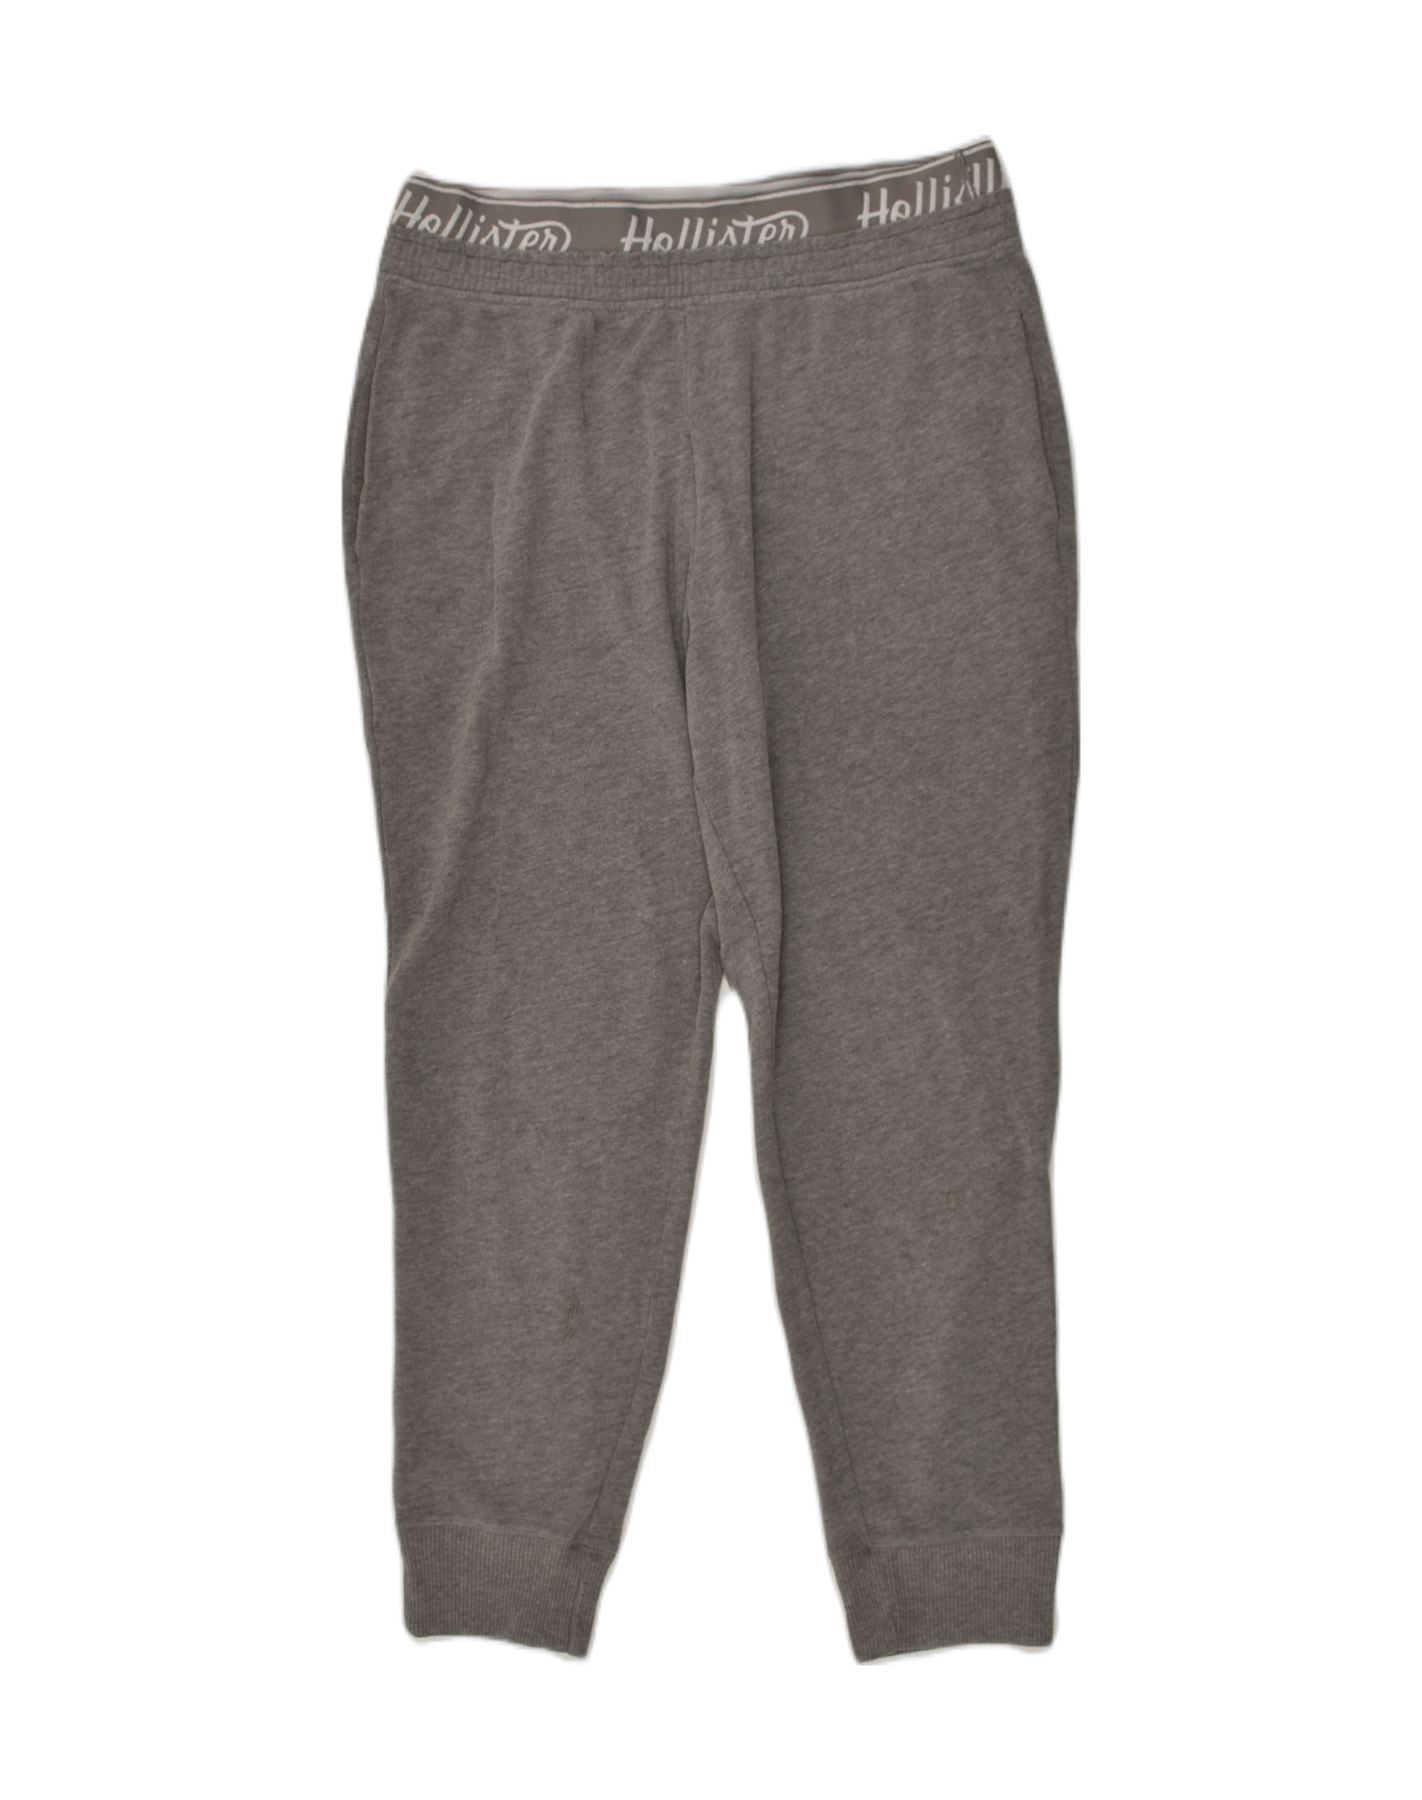 Hollister, Pants, Large Hollister Grey Sweatpants